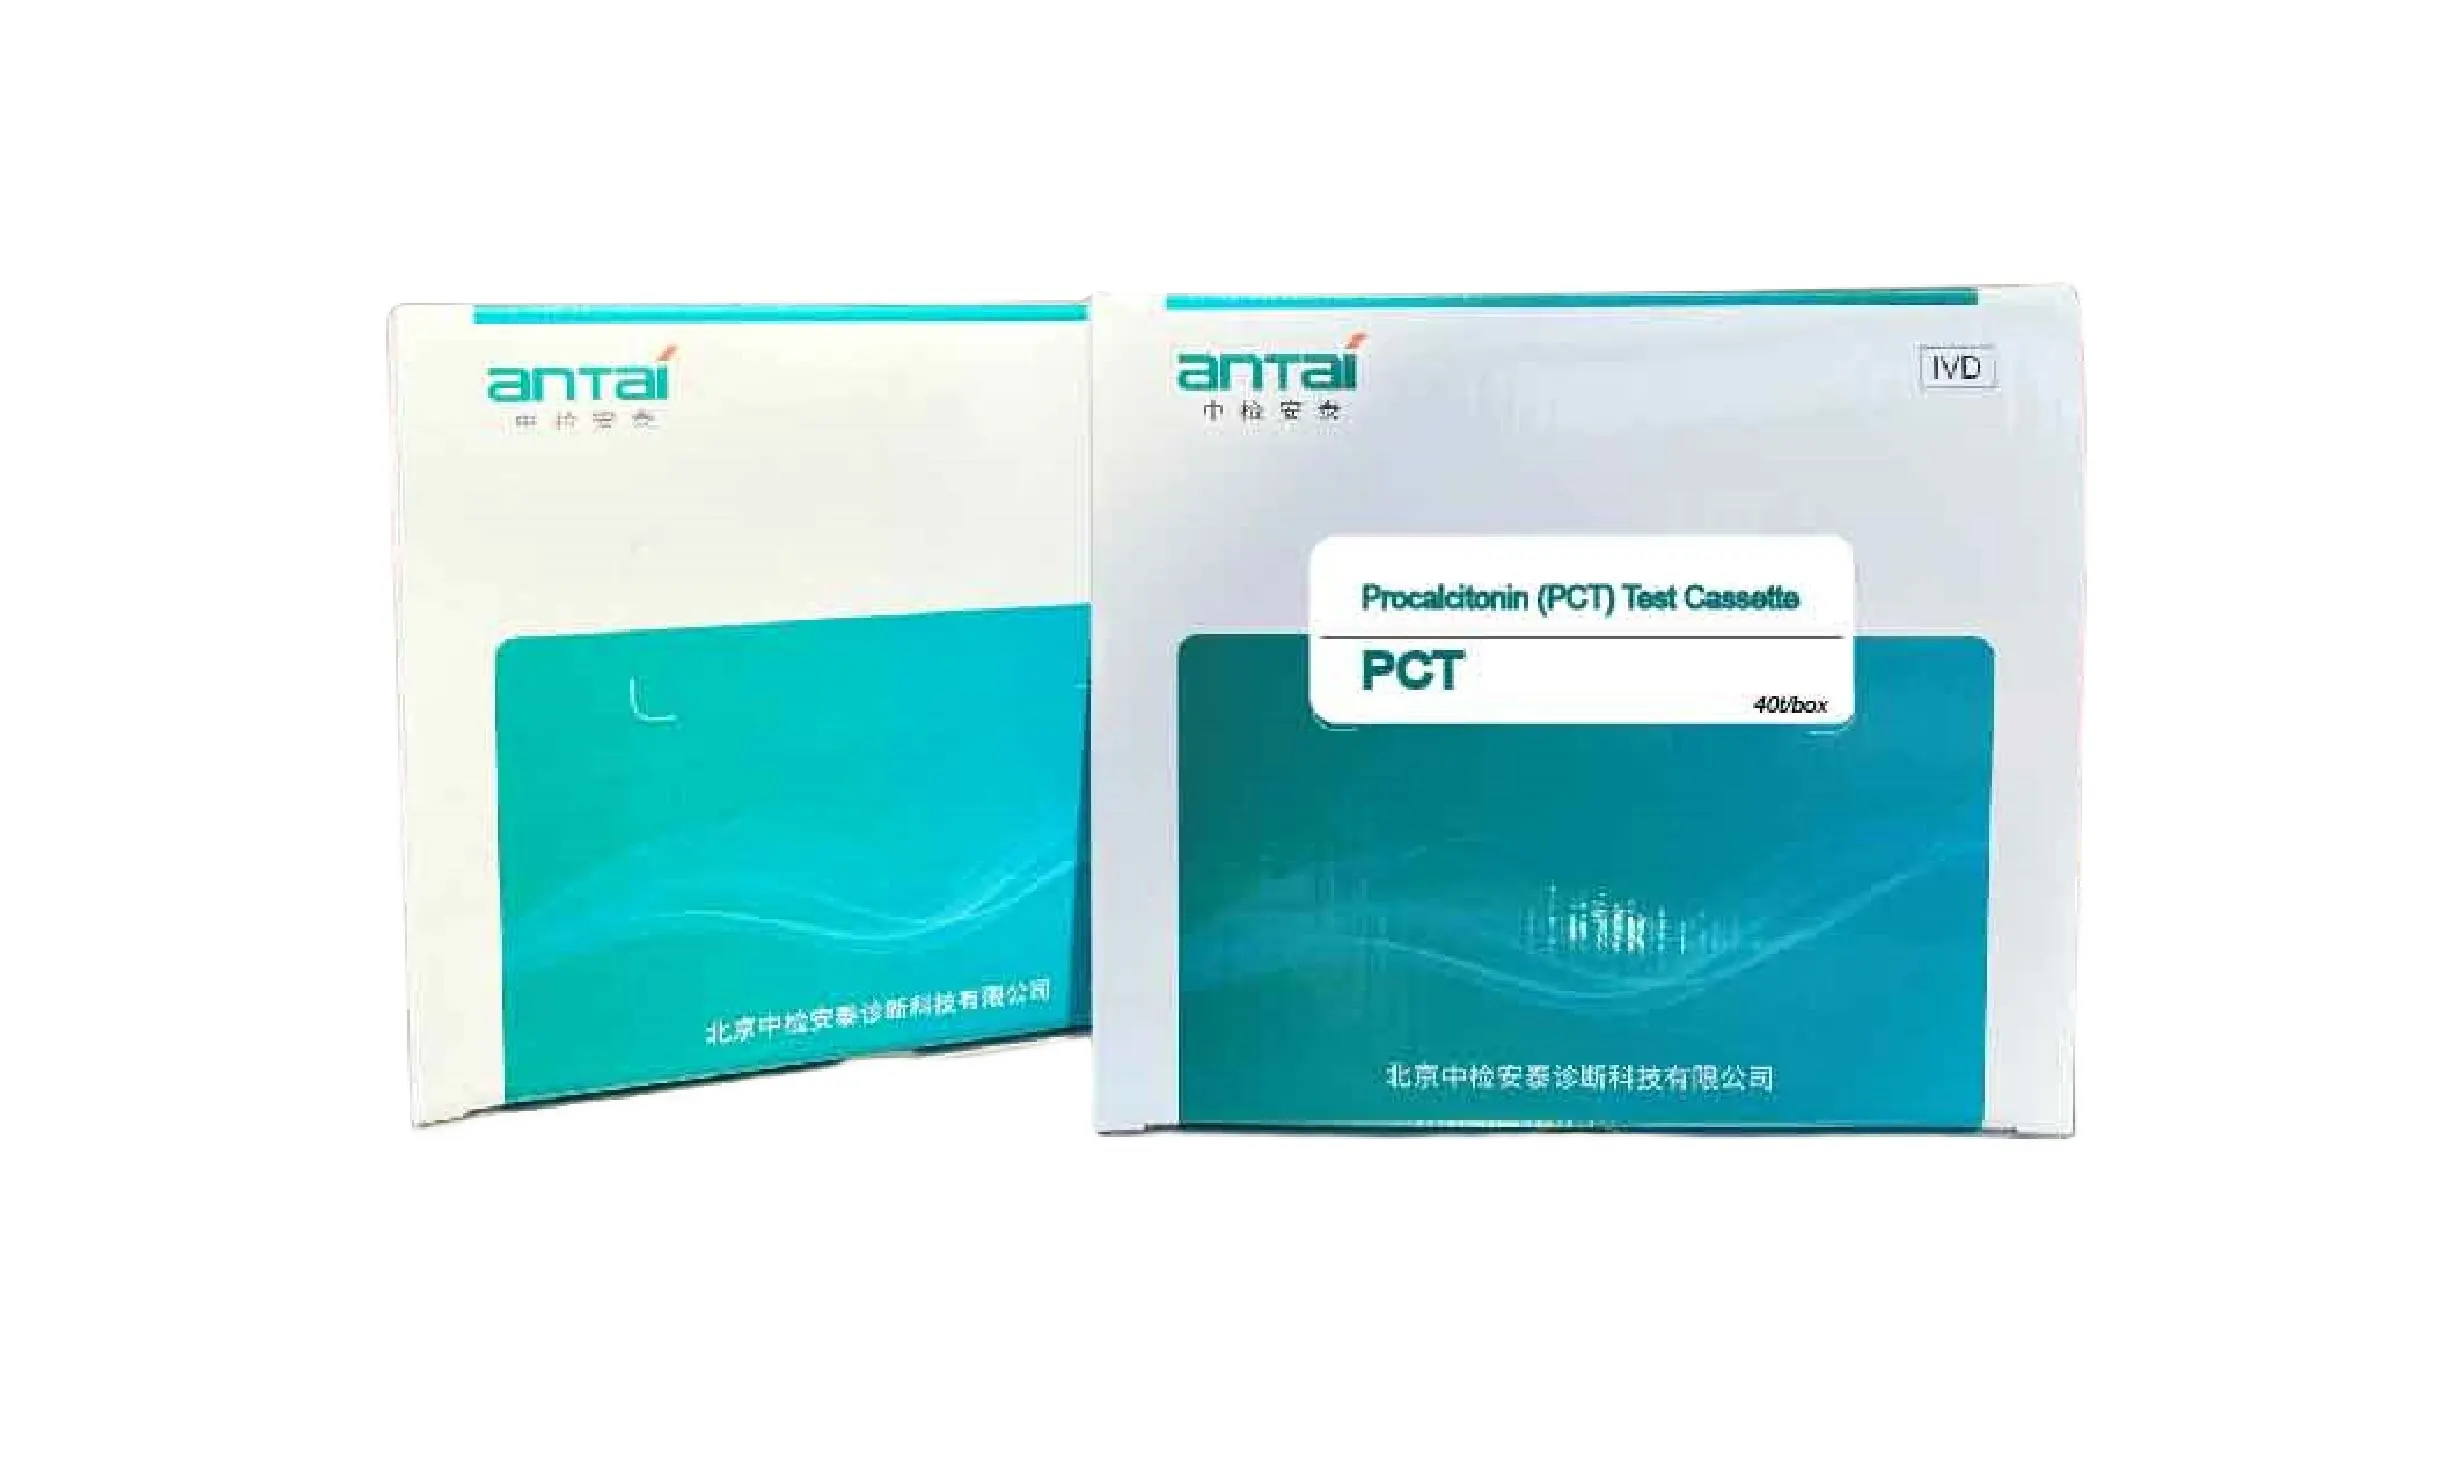 Procalcitonin (PCT) Tests